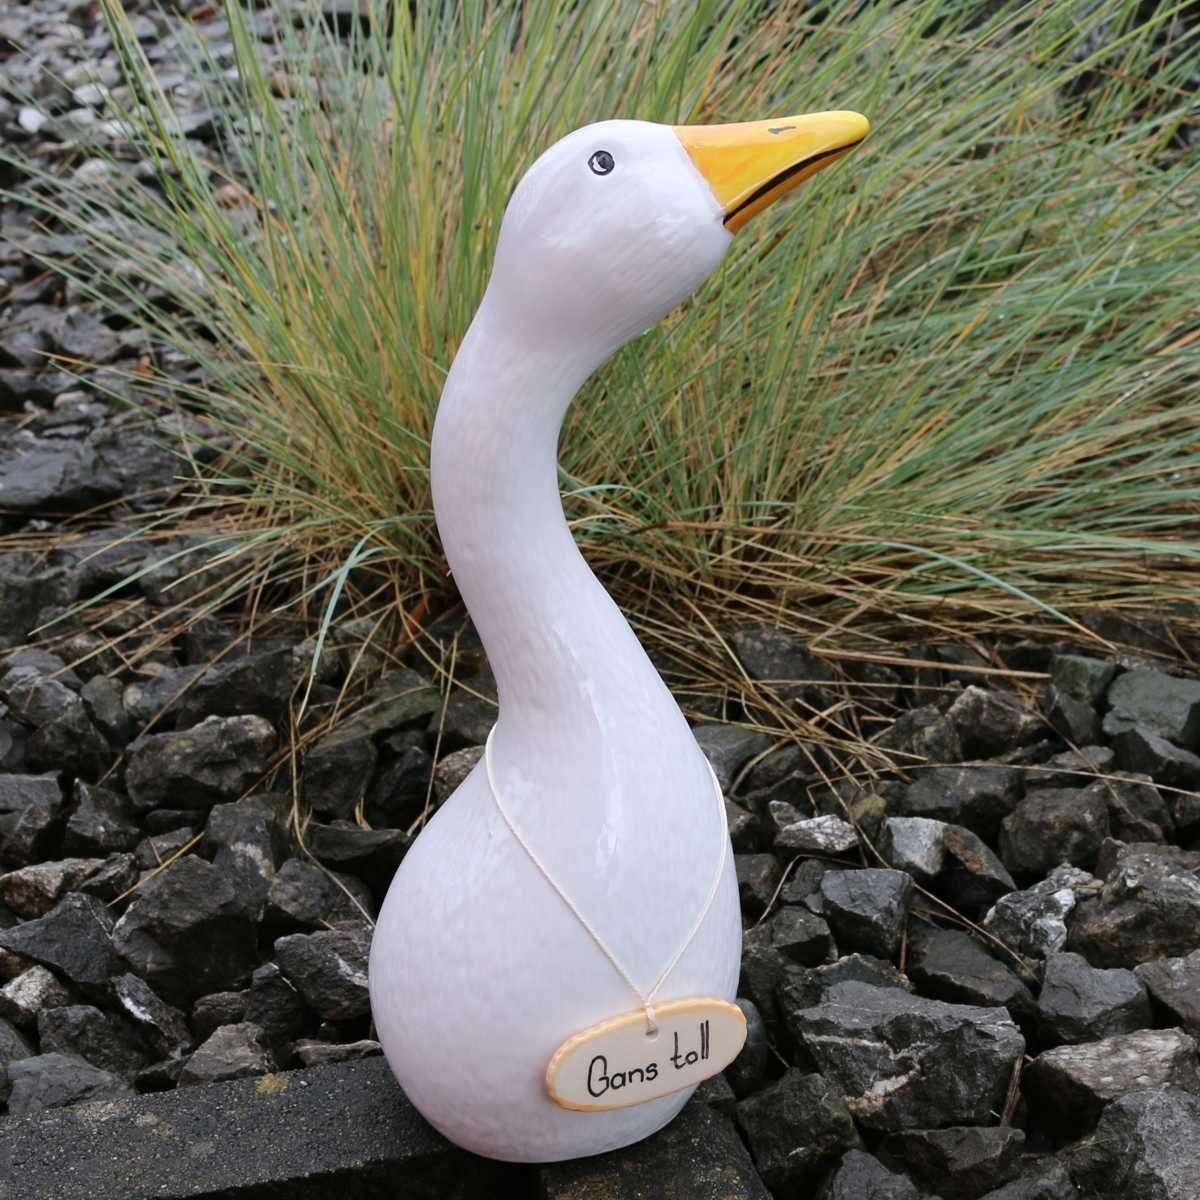 Tangoo-Deko Gartenfigur Tangoo Keramik-Vogel Schild TOLL, mit GANS (Stück) Gans